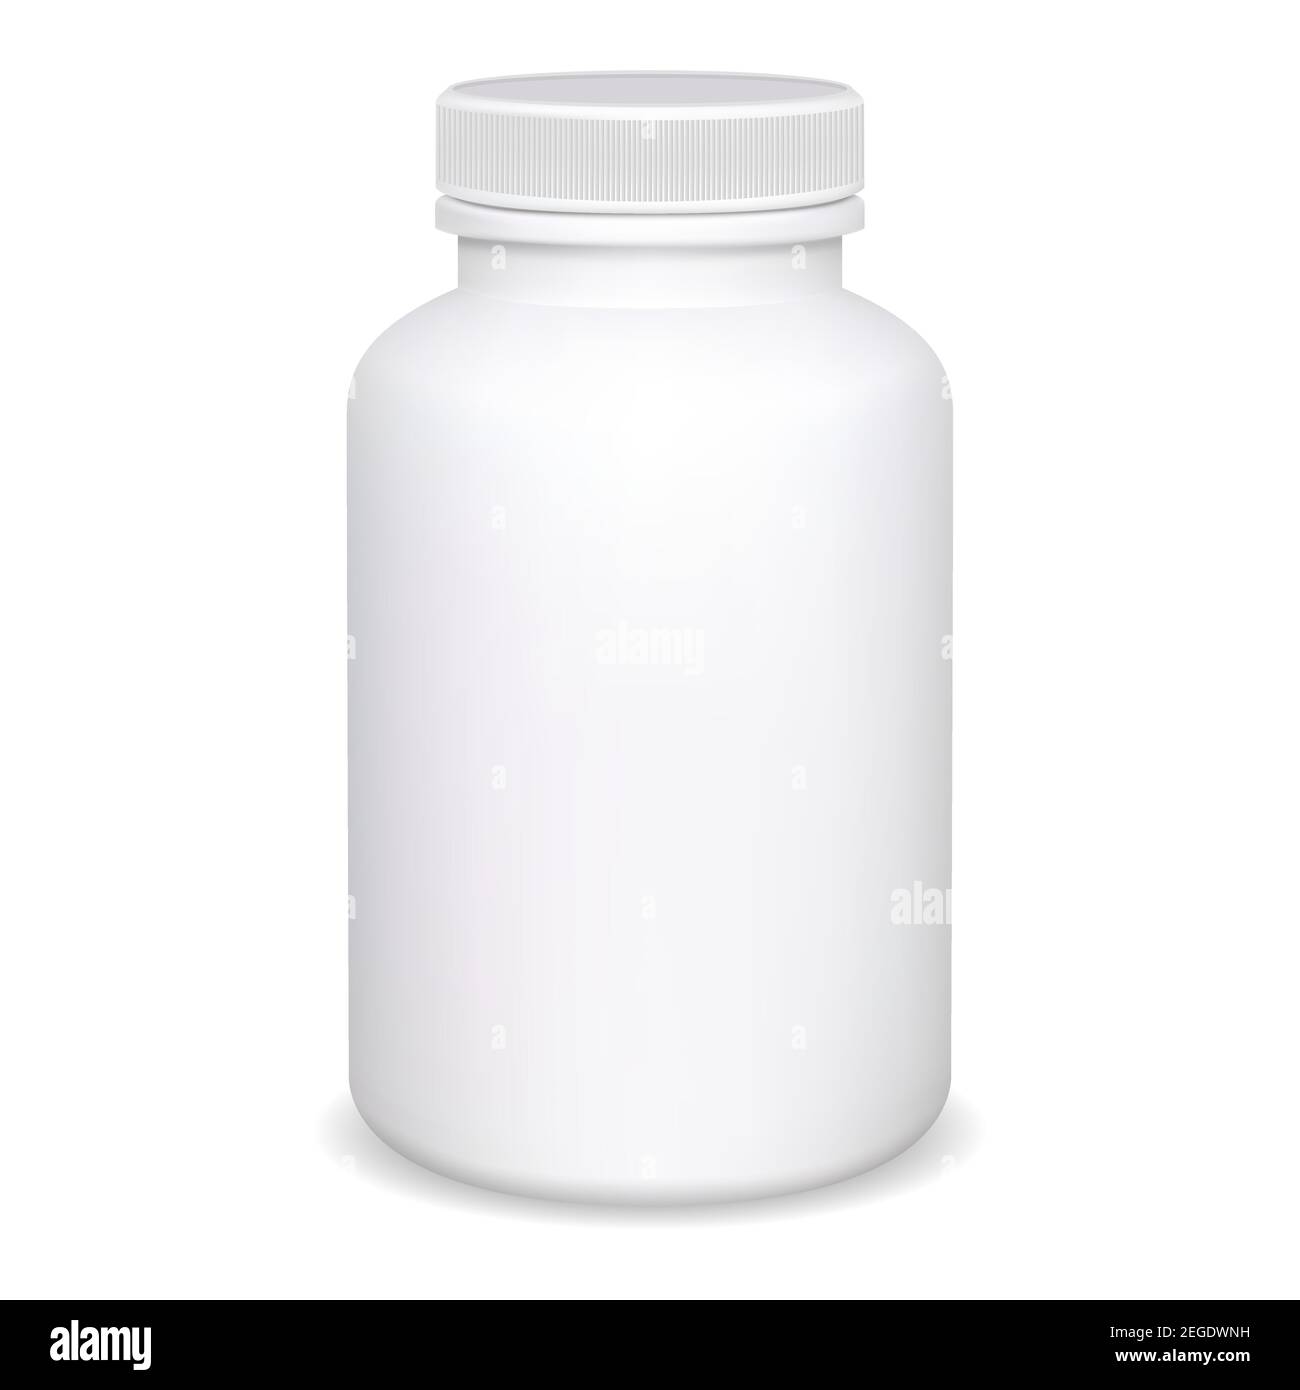 Supplement bottle. Pill container mockup. White medical jar blank isolated template. Vitamin or aspirin capsule box design. Pharmaceutical remedy drug Stock Vector